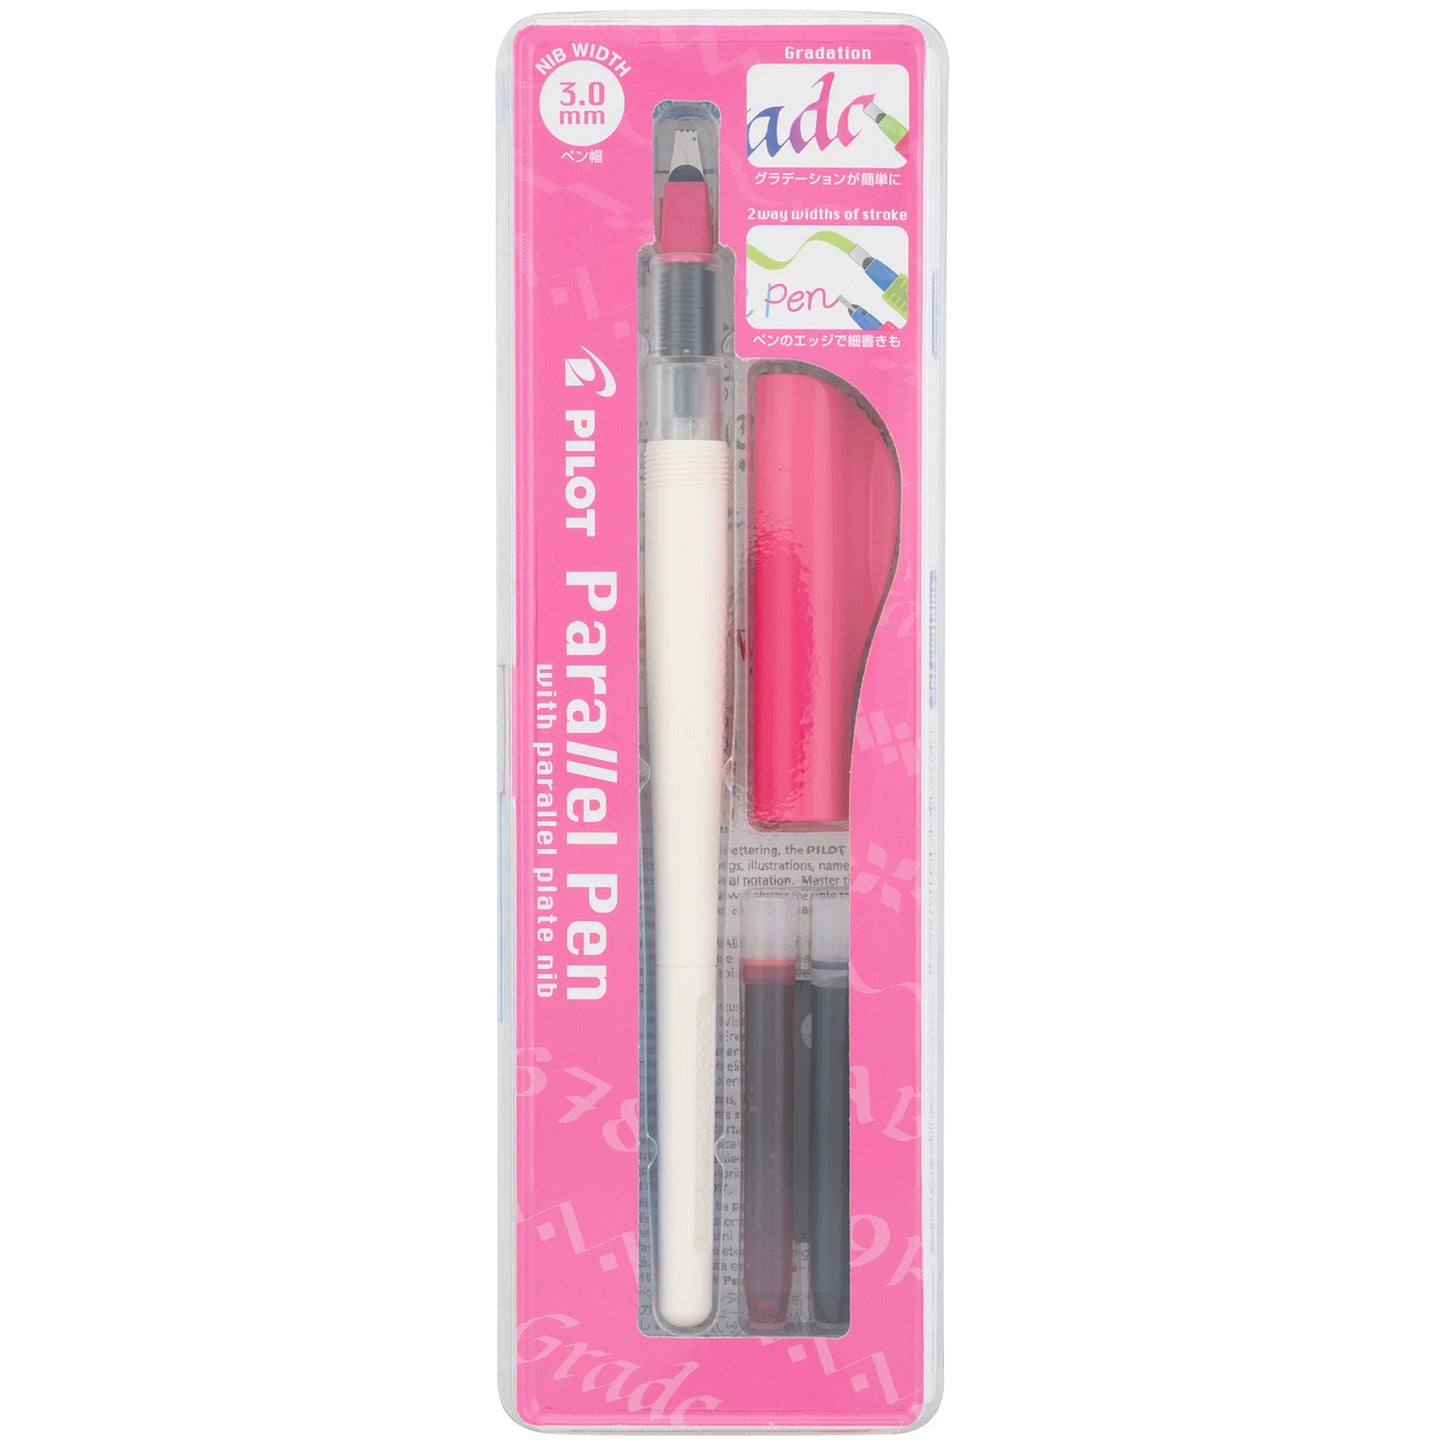 Pilot Parallel Pen - 3.0 mm Nib - Calligraphy Fountain Pen Package